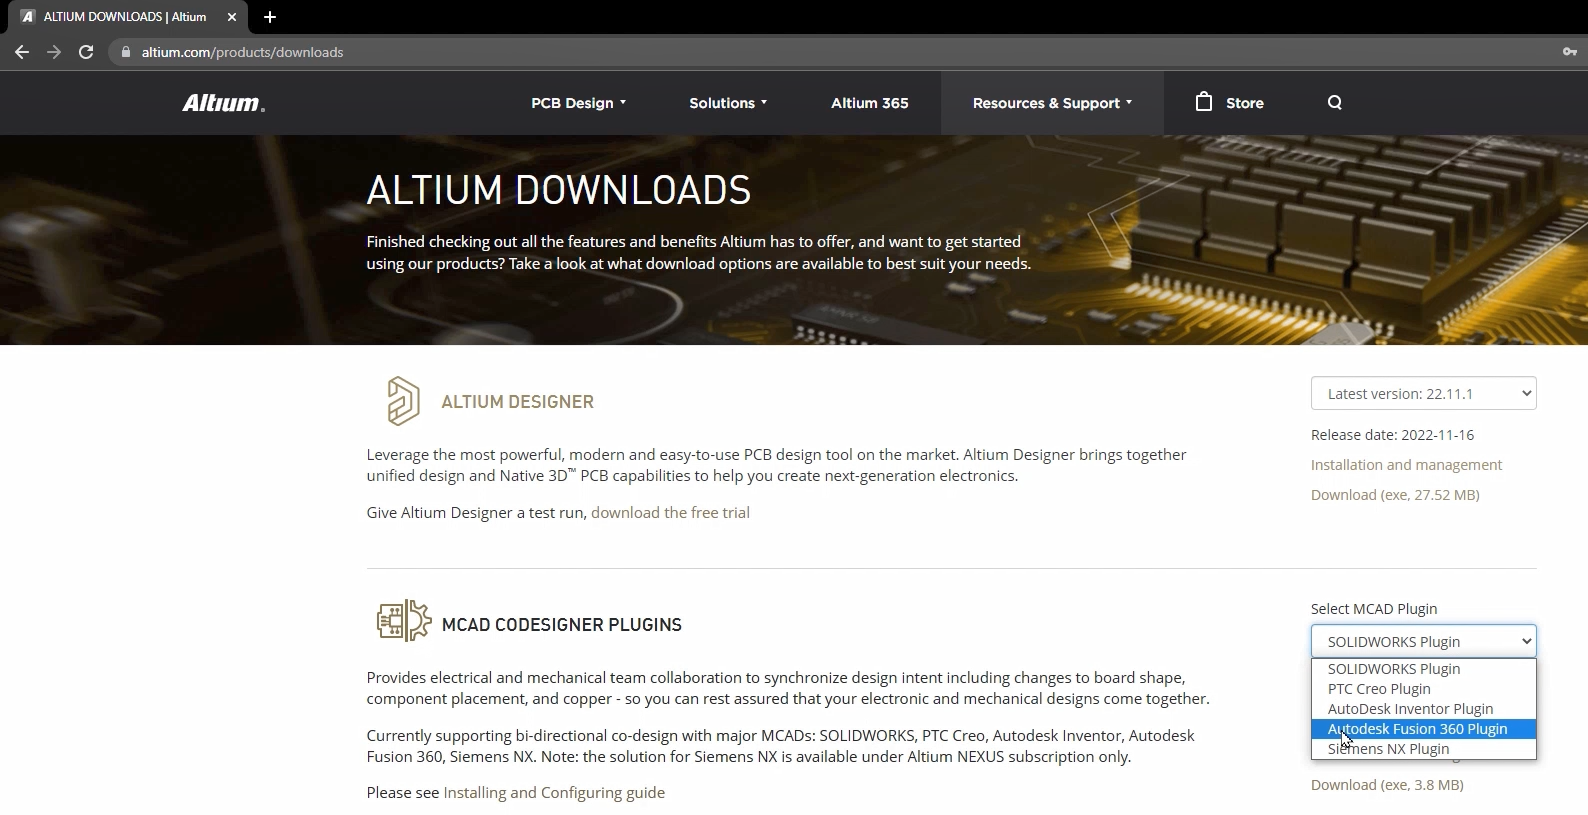 Fig. 1 - Altium downloads page